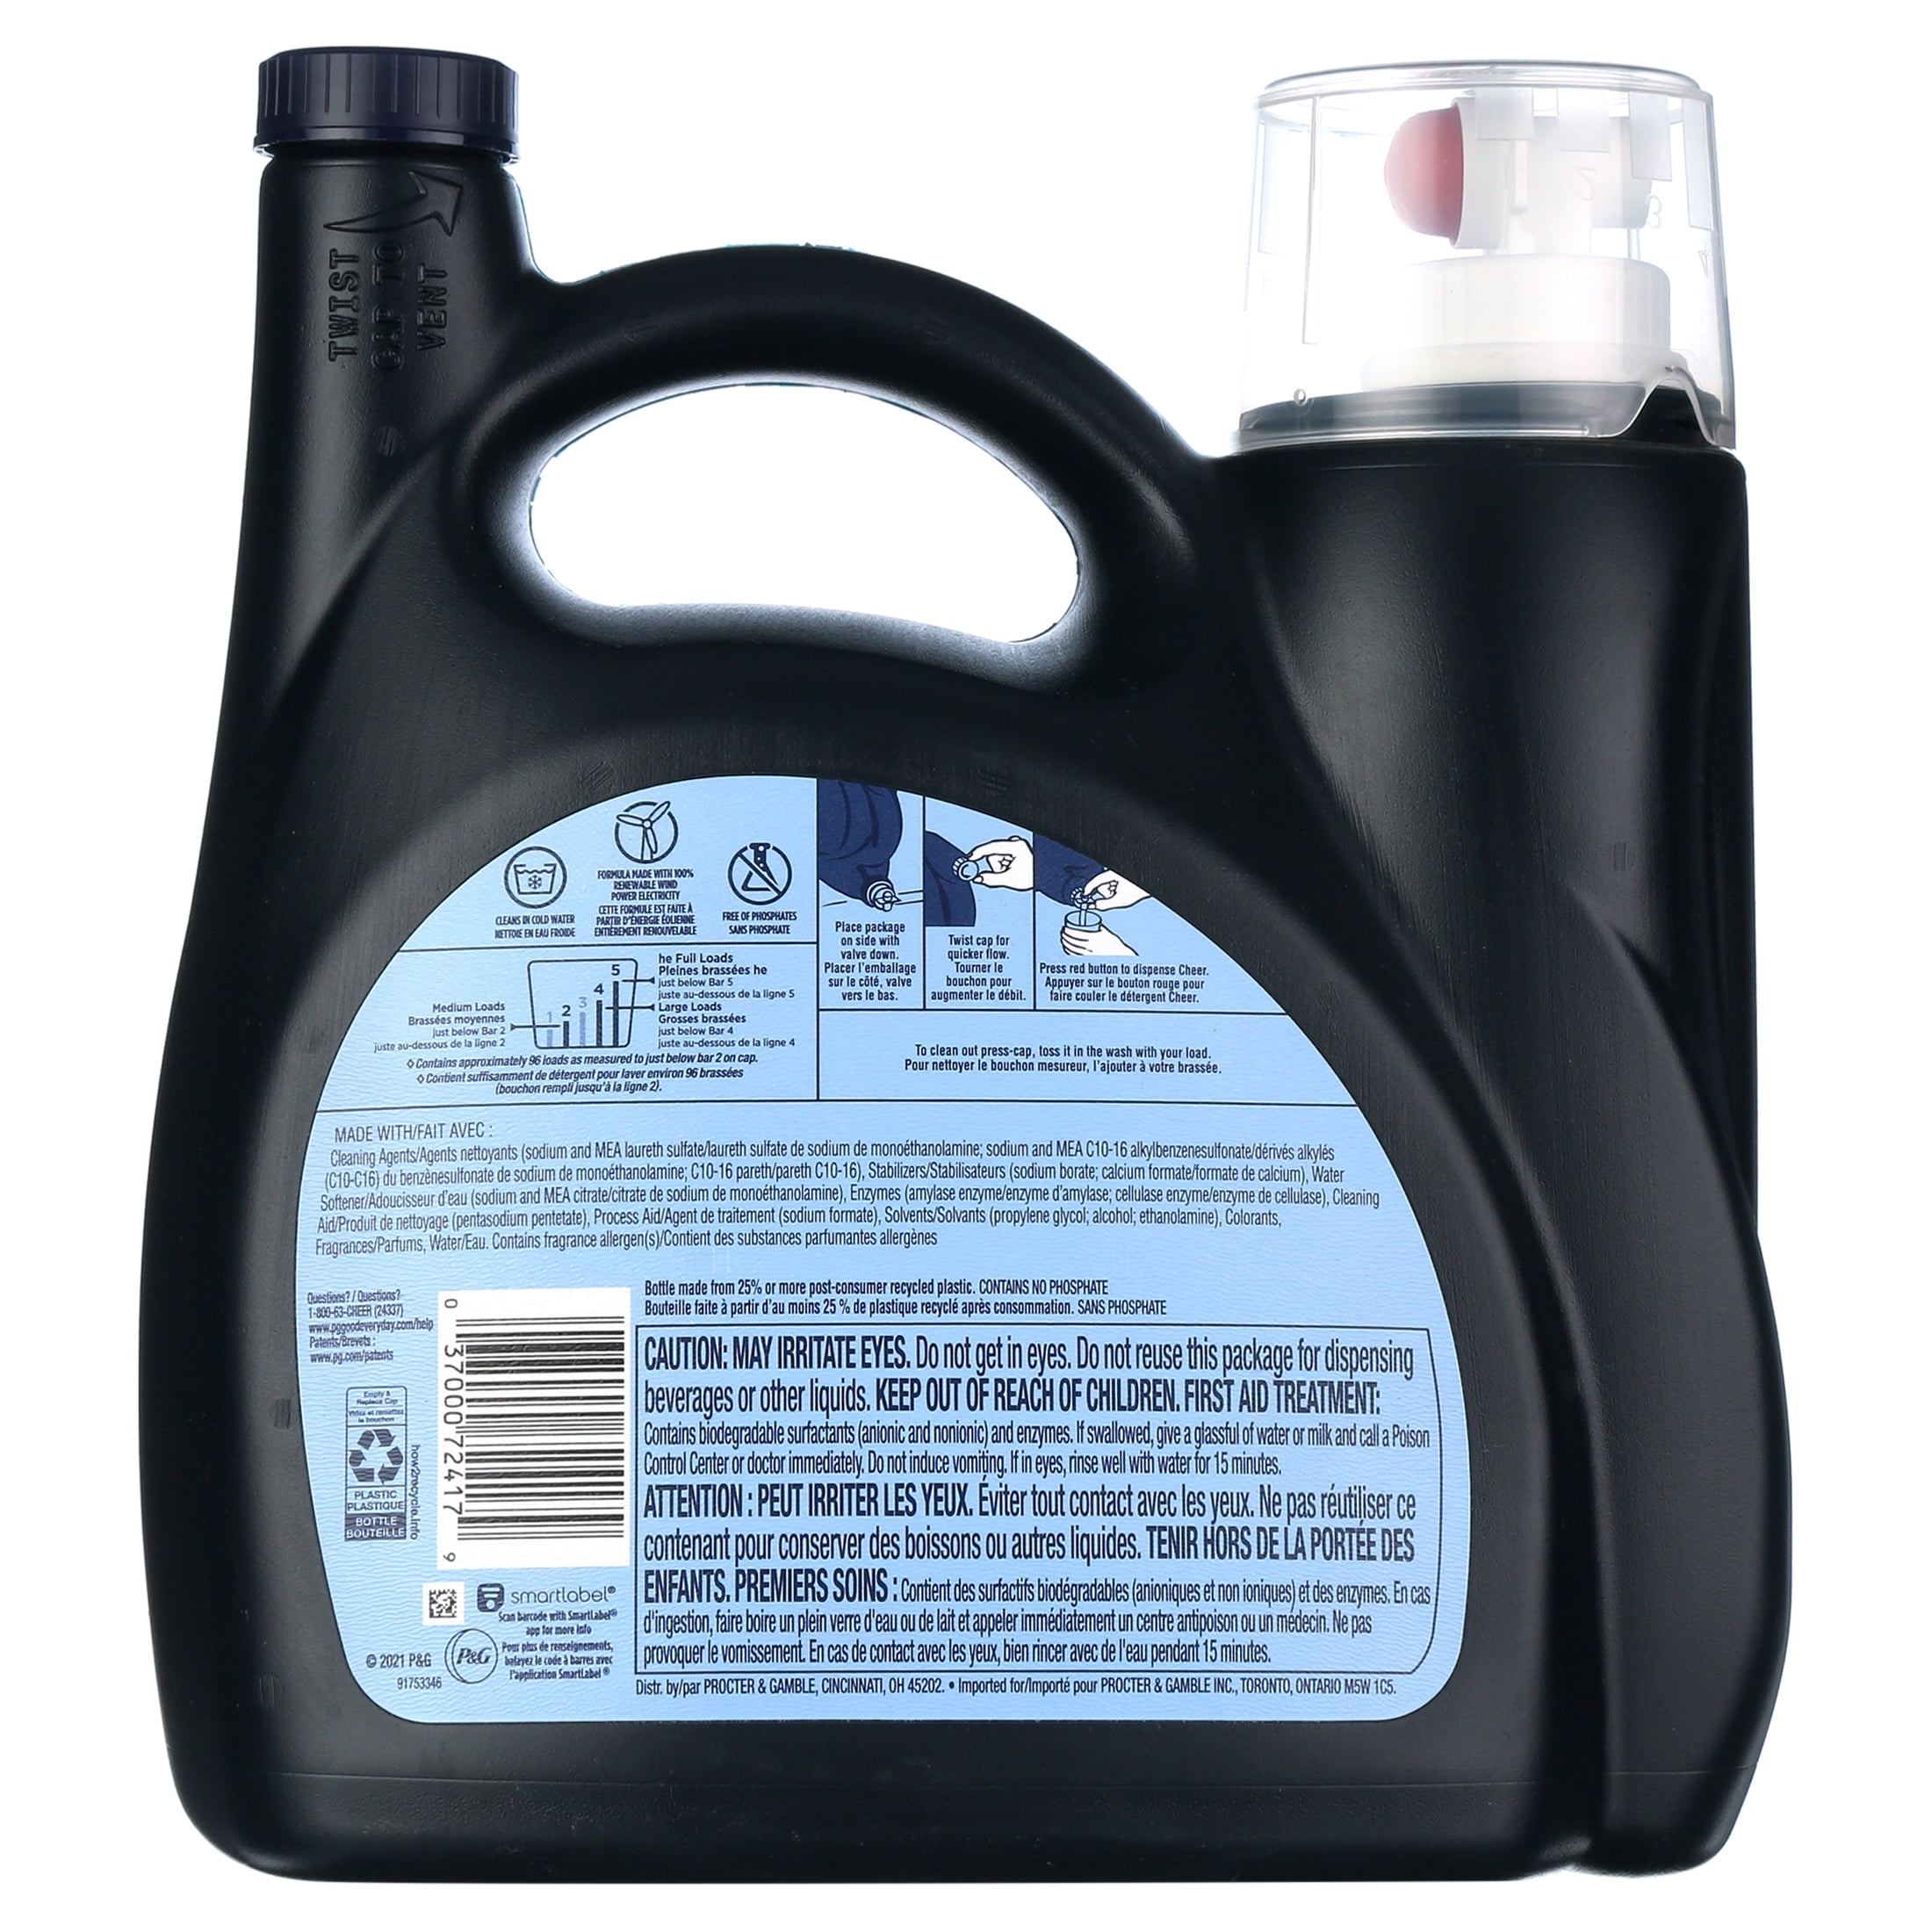 Dark Laundry Liquid Detergent – محصولات شوینده و بهداشتی رویا